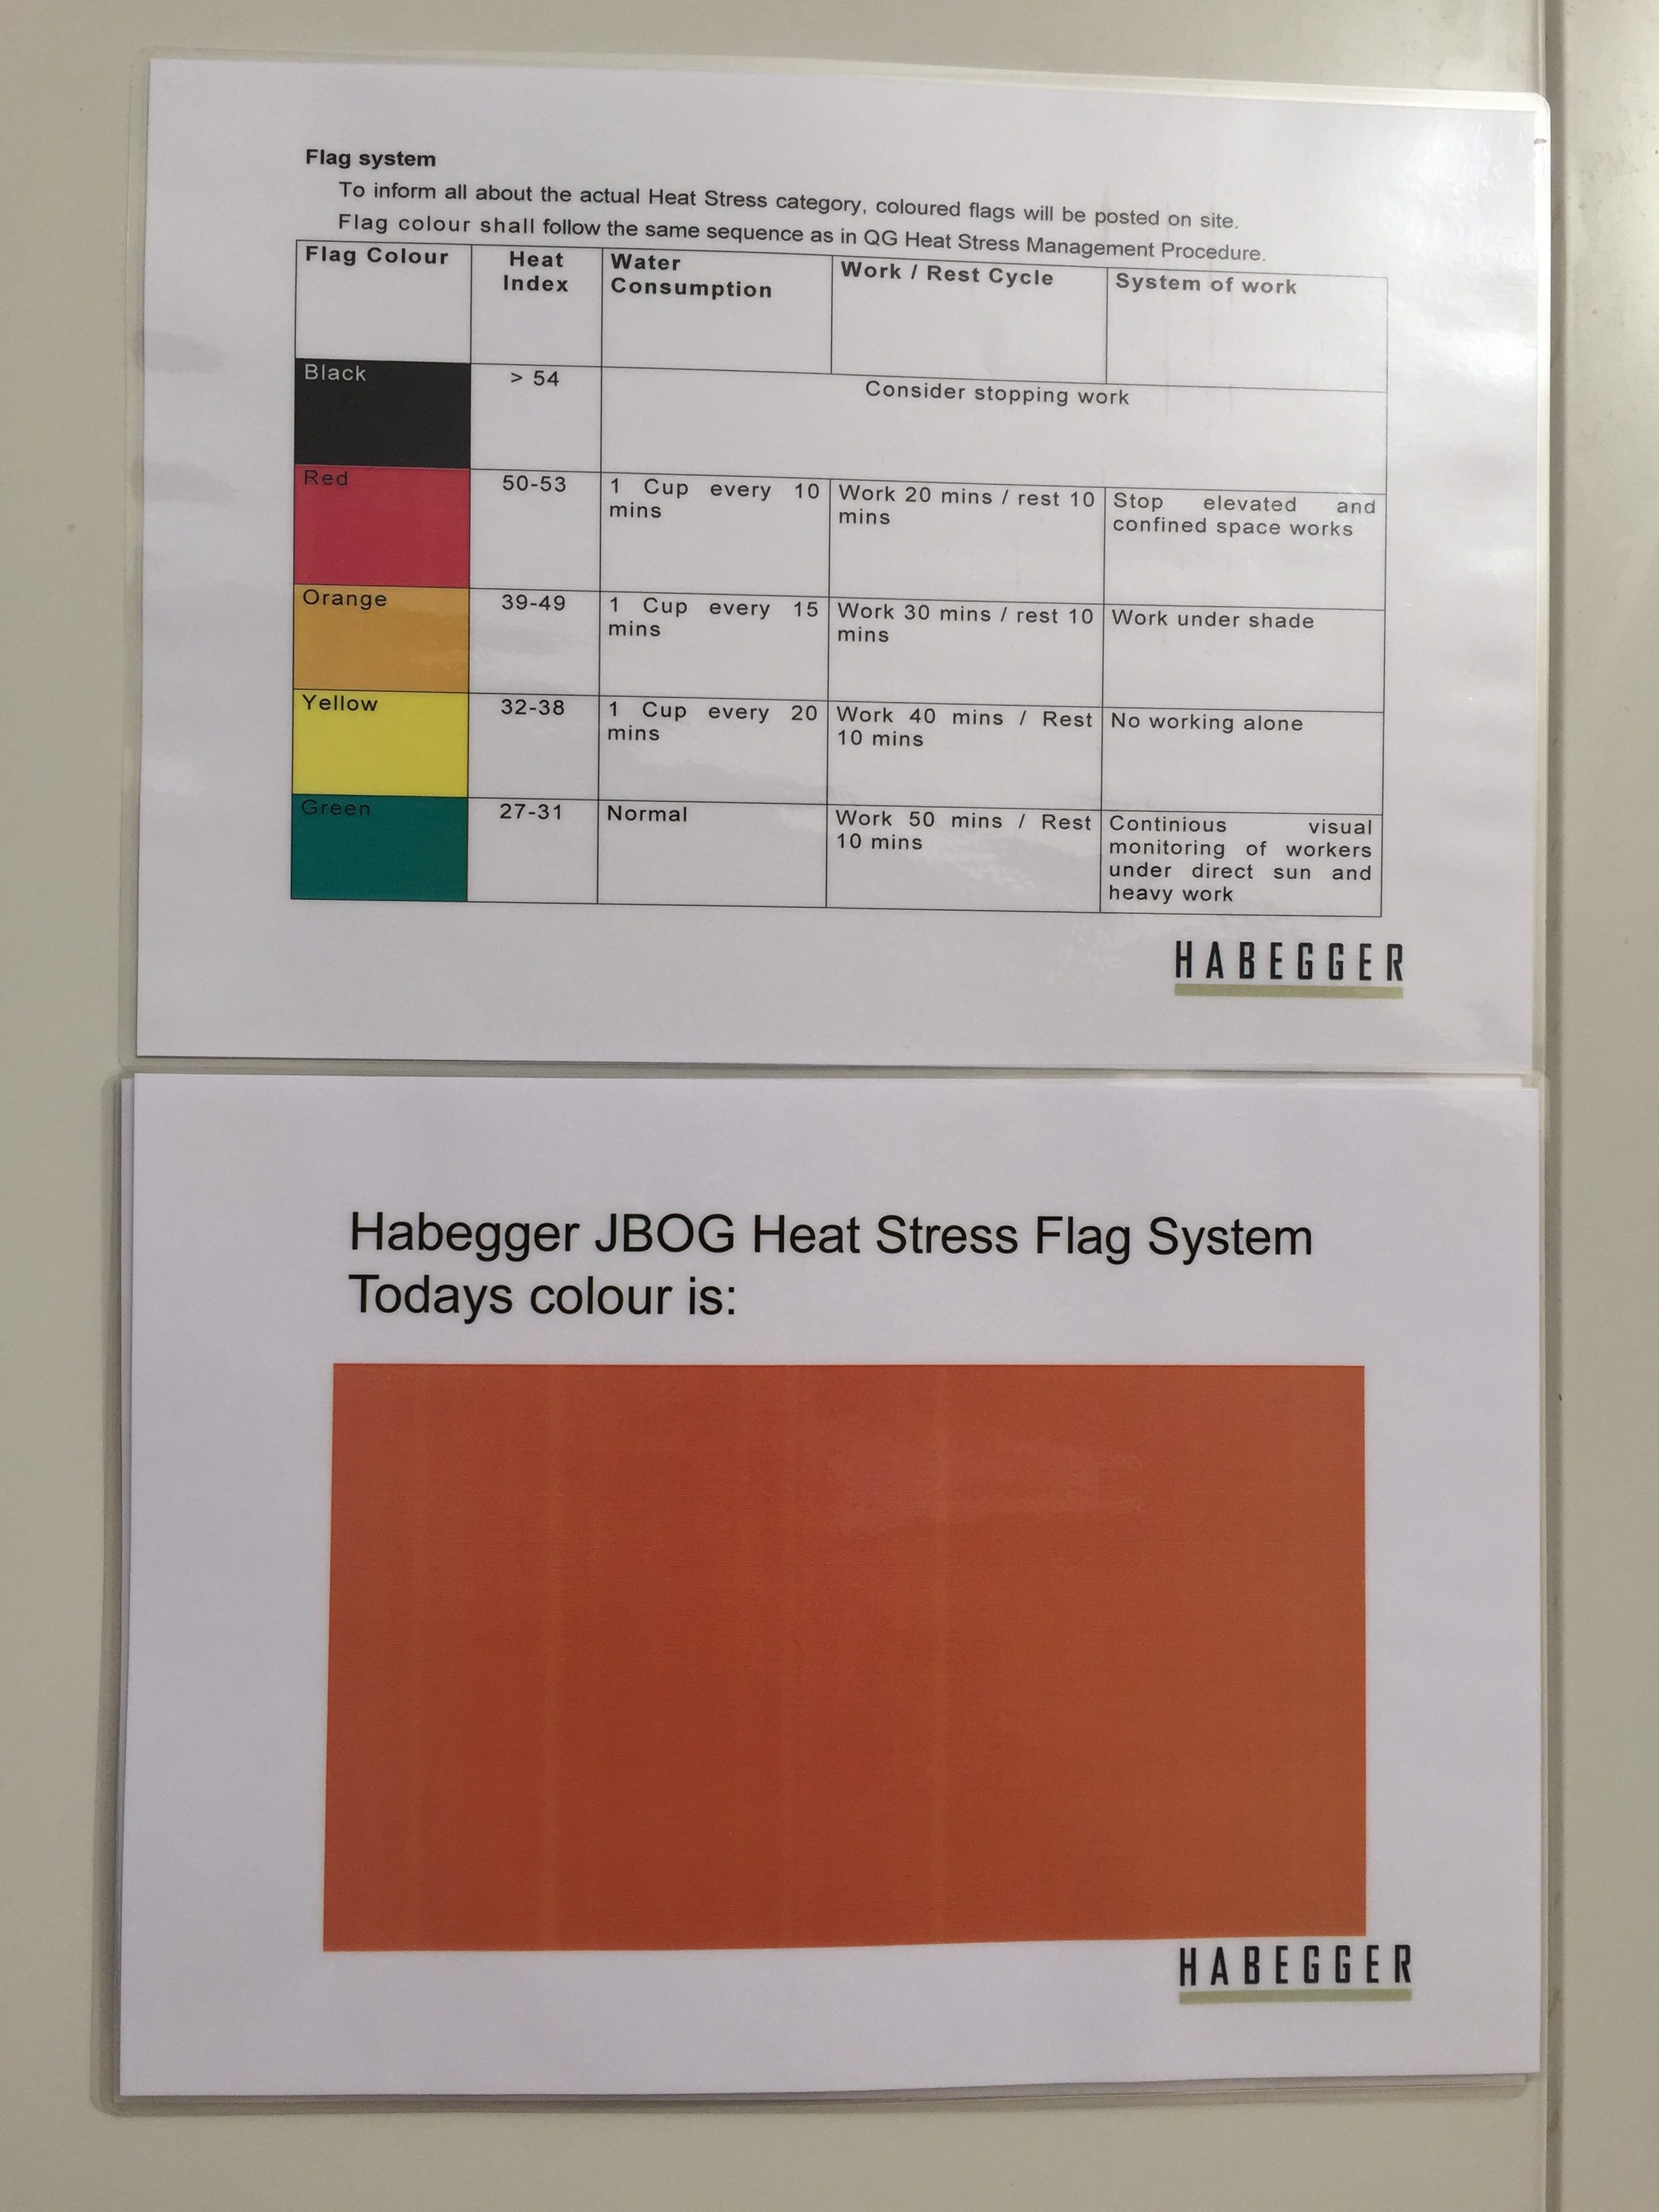 The Heat stress Flag system